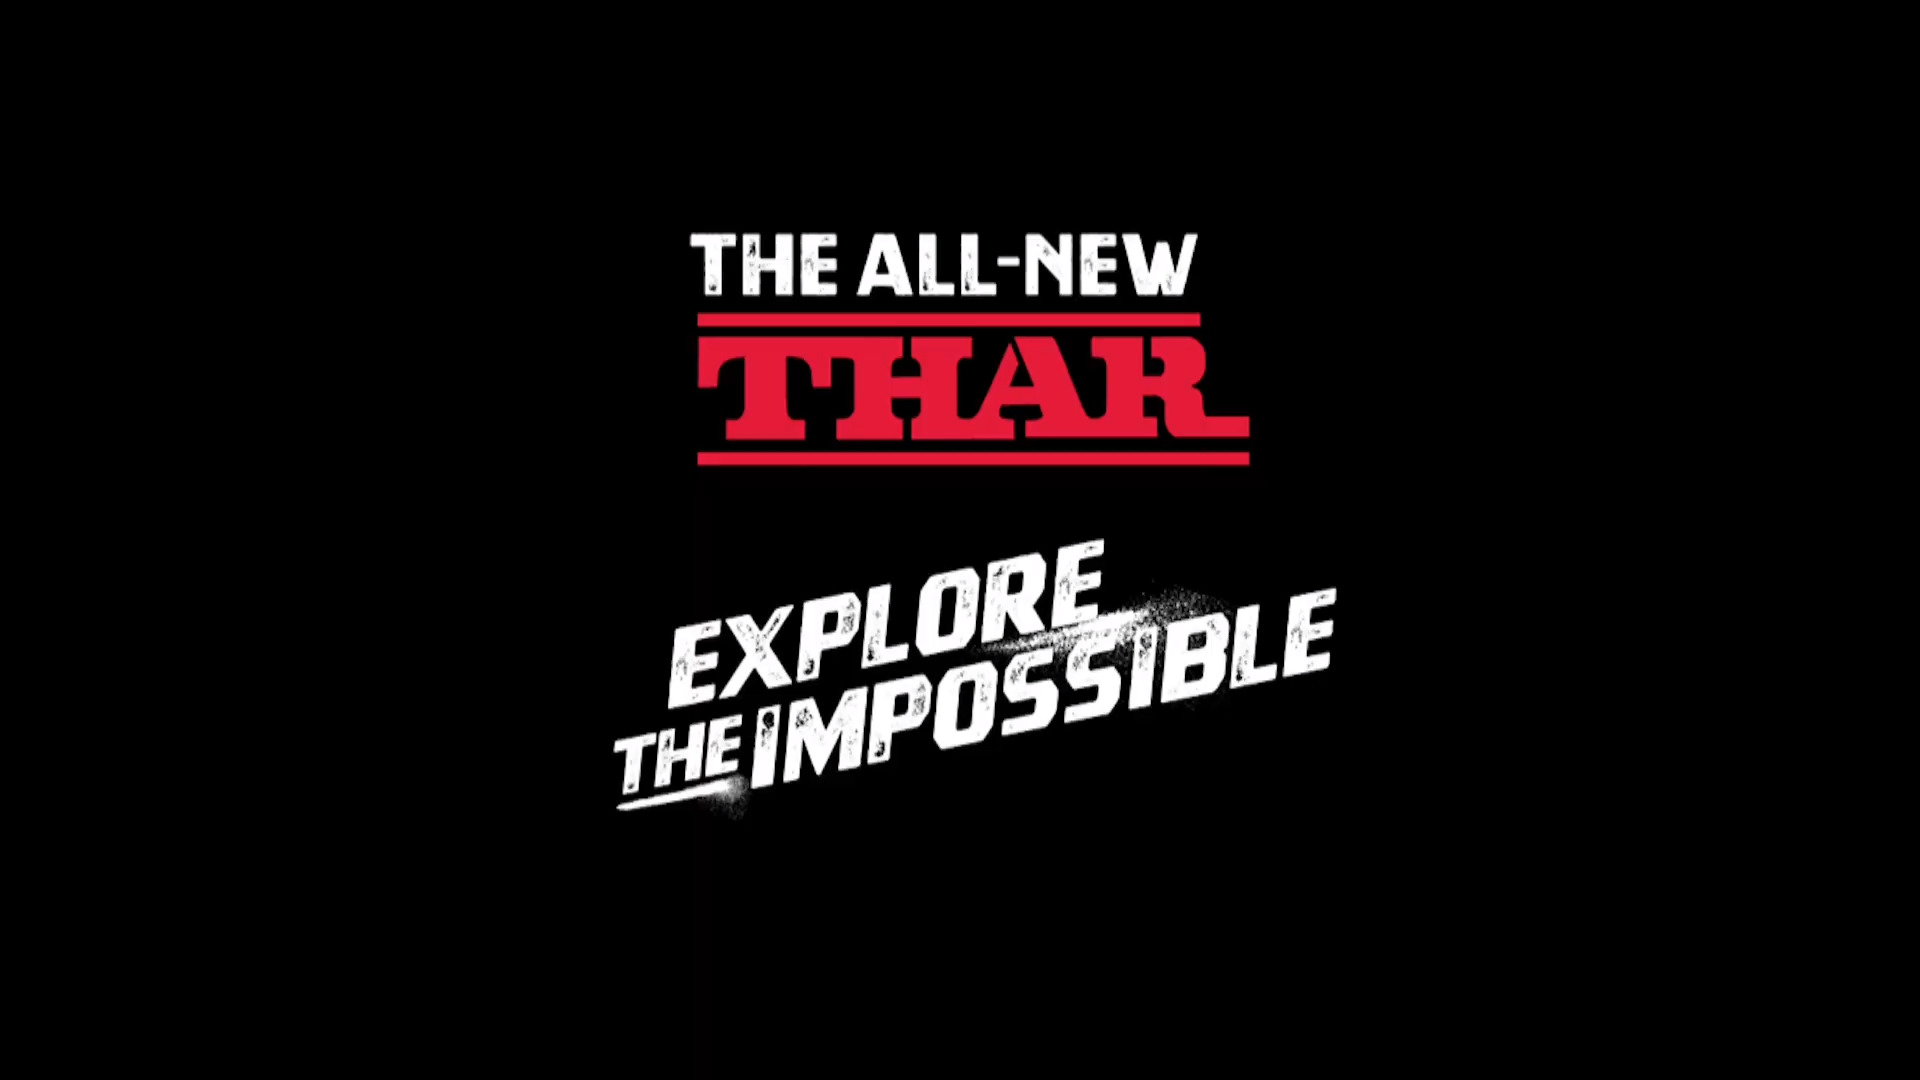 New Mahindra Thar - Explore the Impossible!